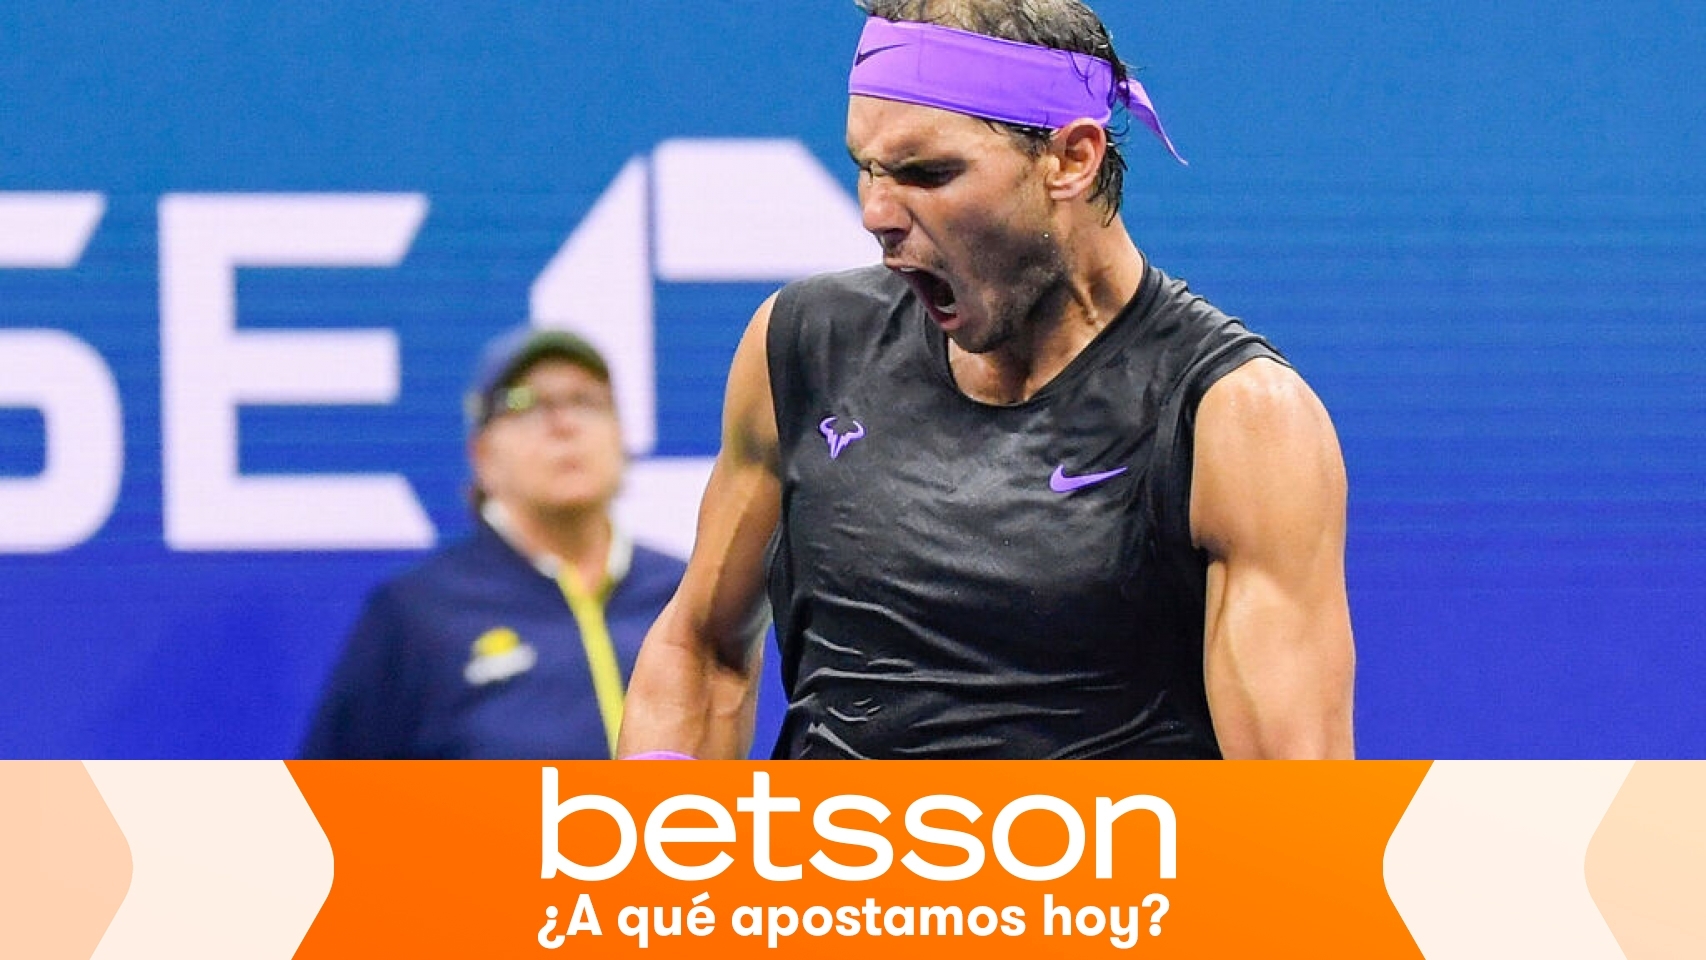 Gana 50 euros si Rafa Nadal gana 0-3 a Berrettini en semis del US Open